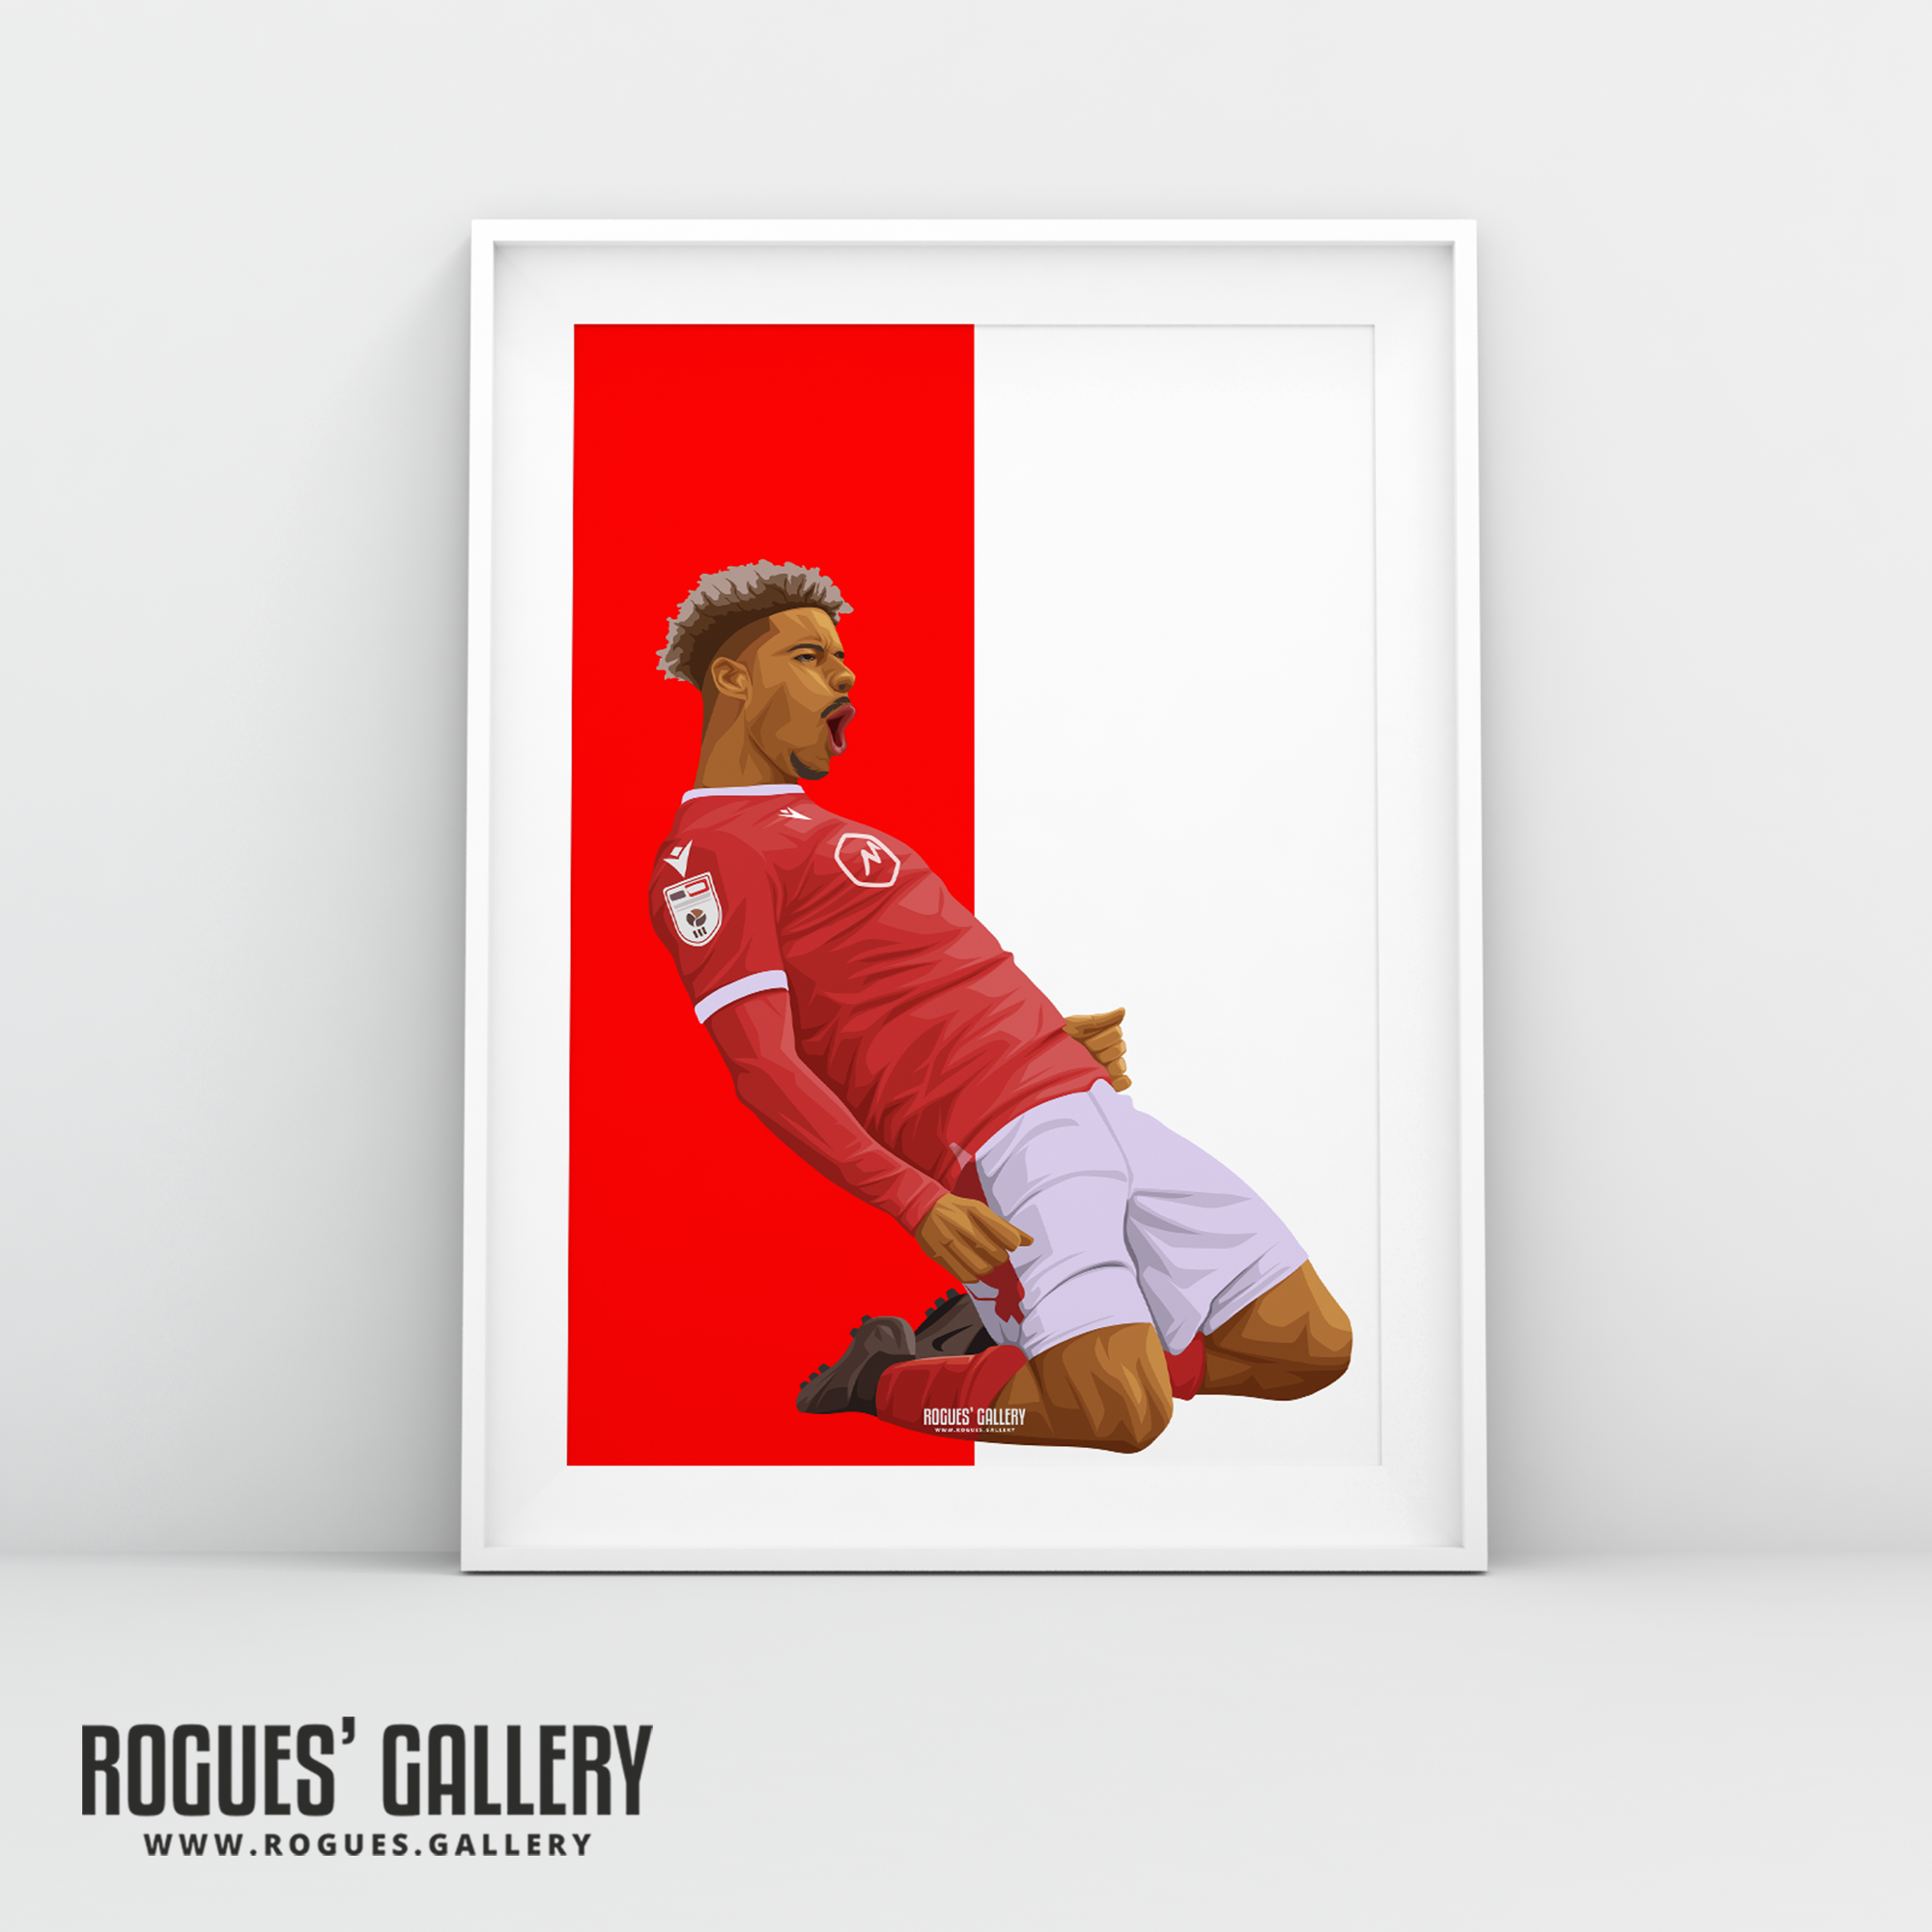 Lyle Taylor Nottingham Forest City Ground striker goals A3 red white icon print edit portrait